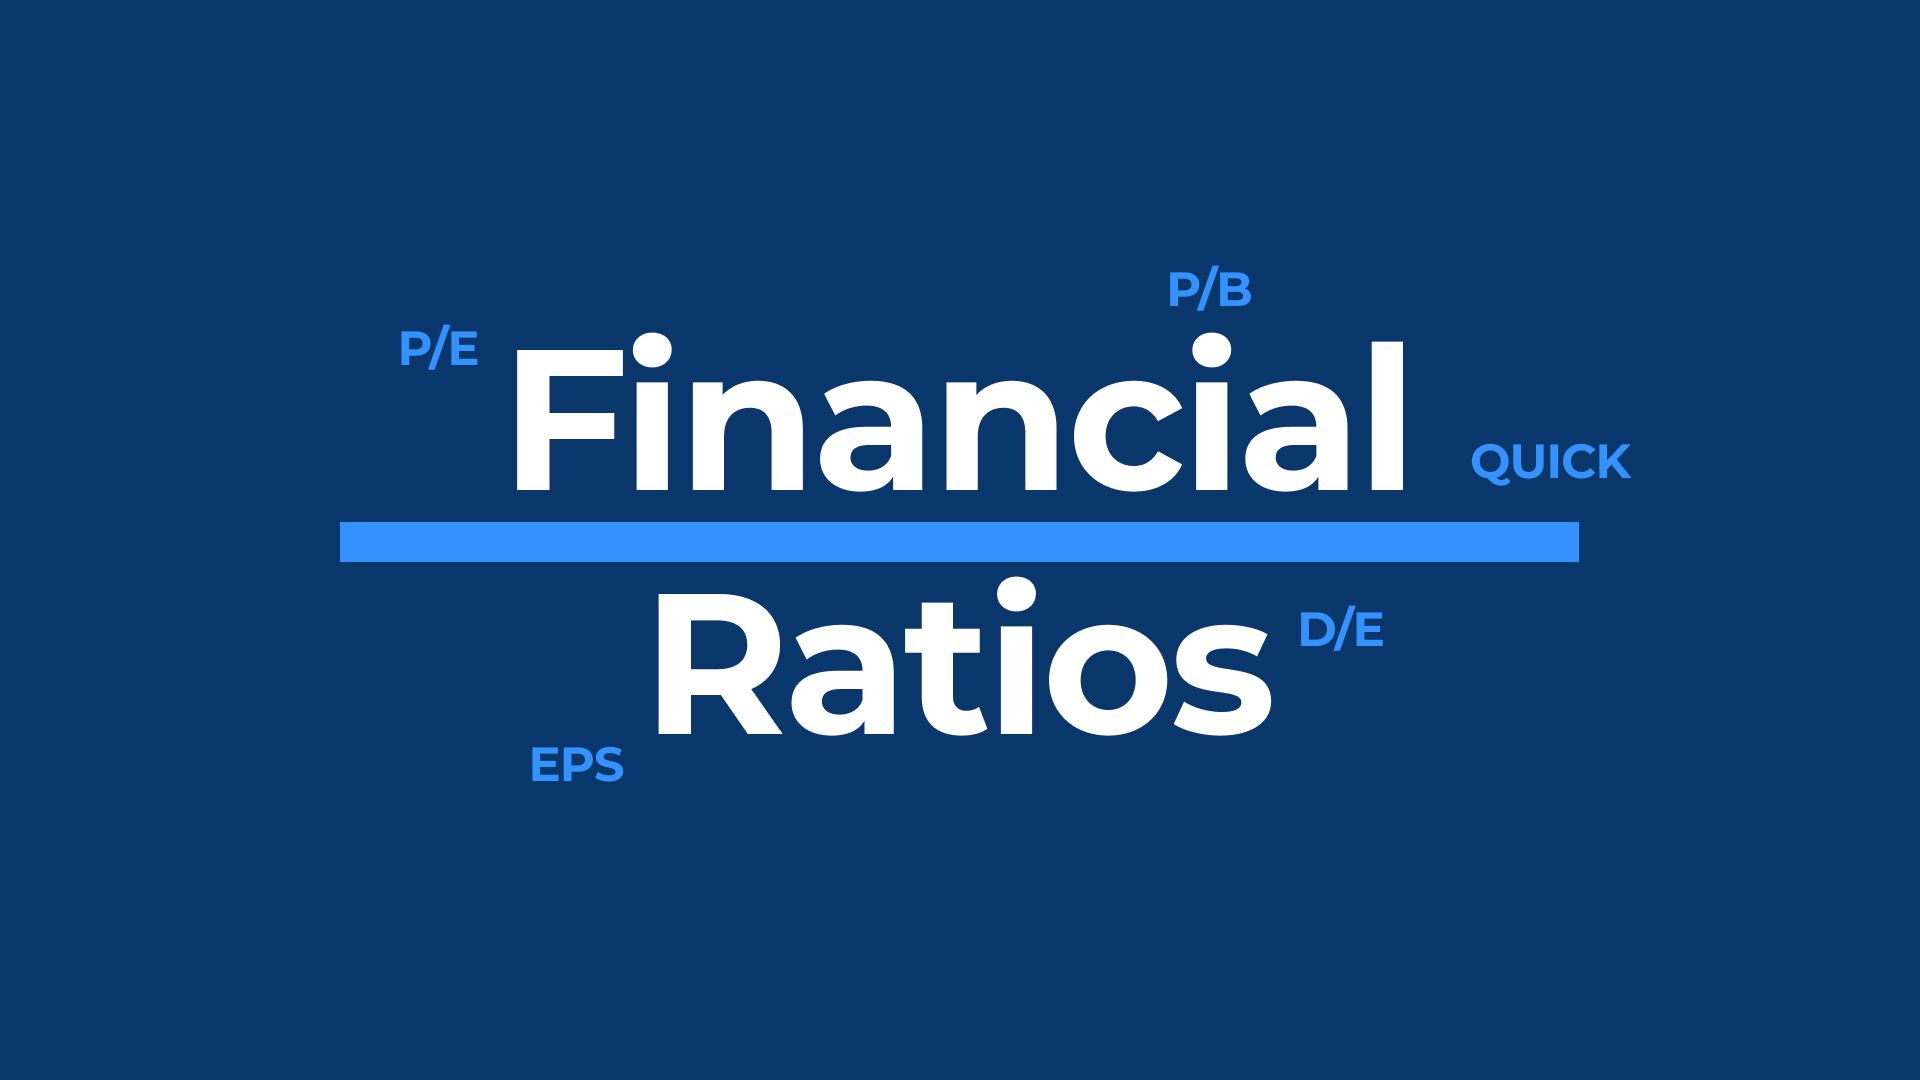 5 financial ratio abbreviations float around - P/E, P/B, EPS, D/E and quick.   